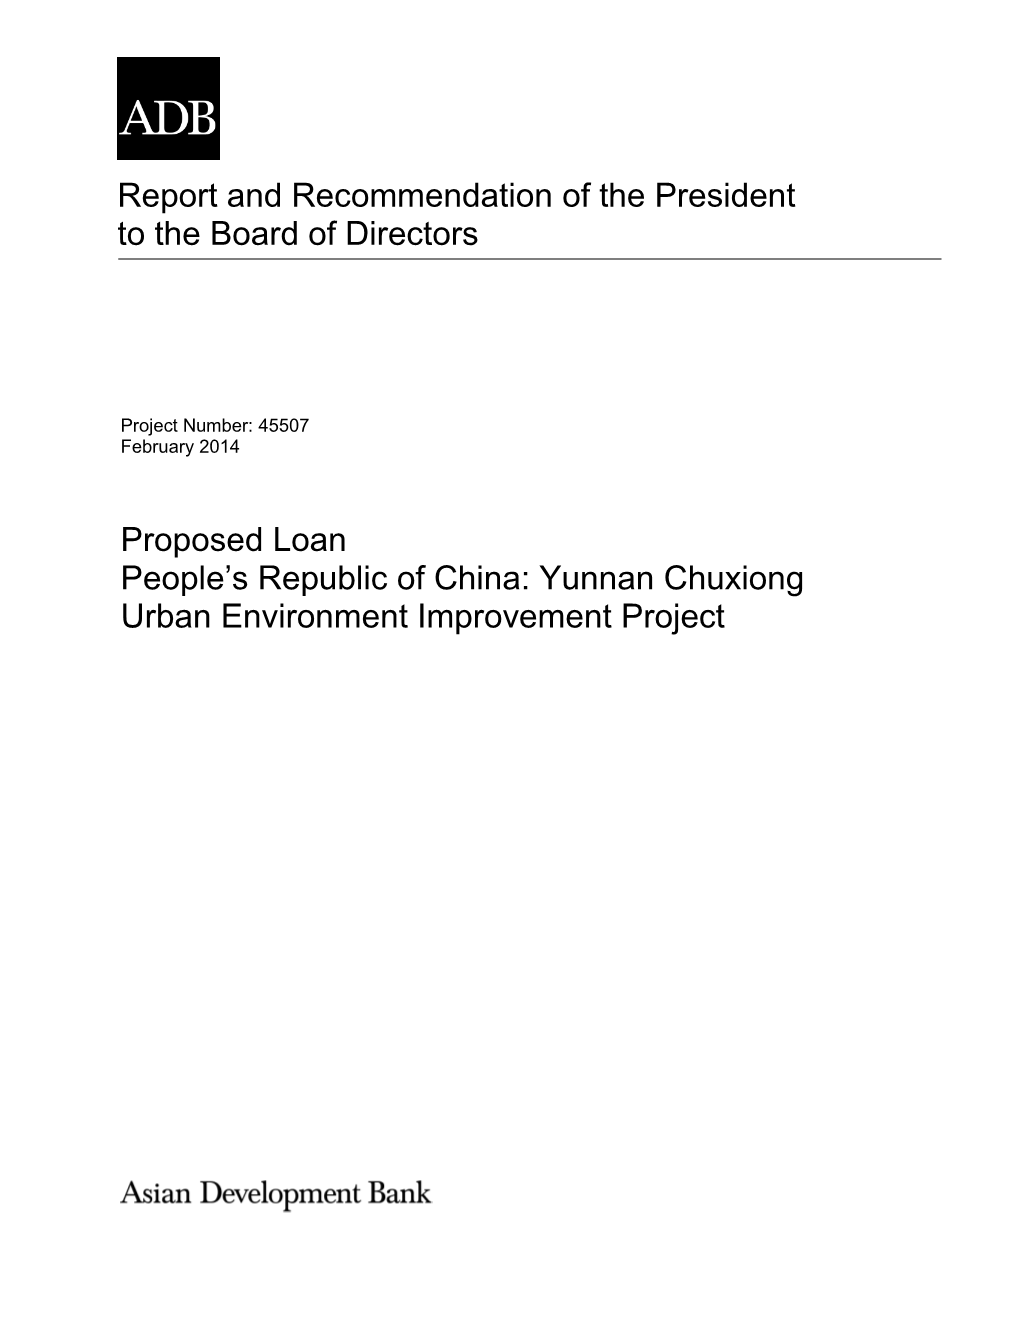 Yunnan Chuxiong Urban Environment Improvement Project